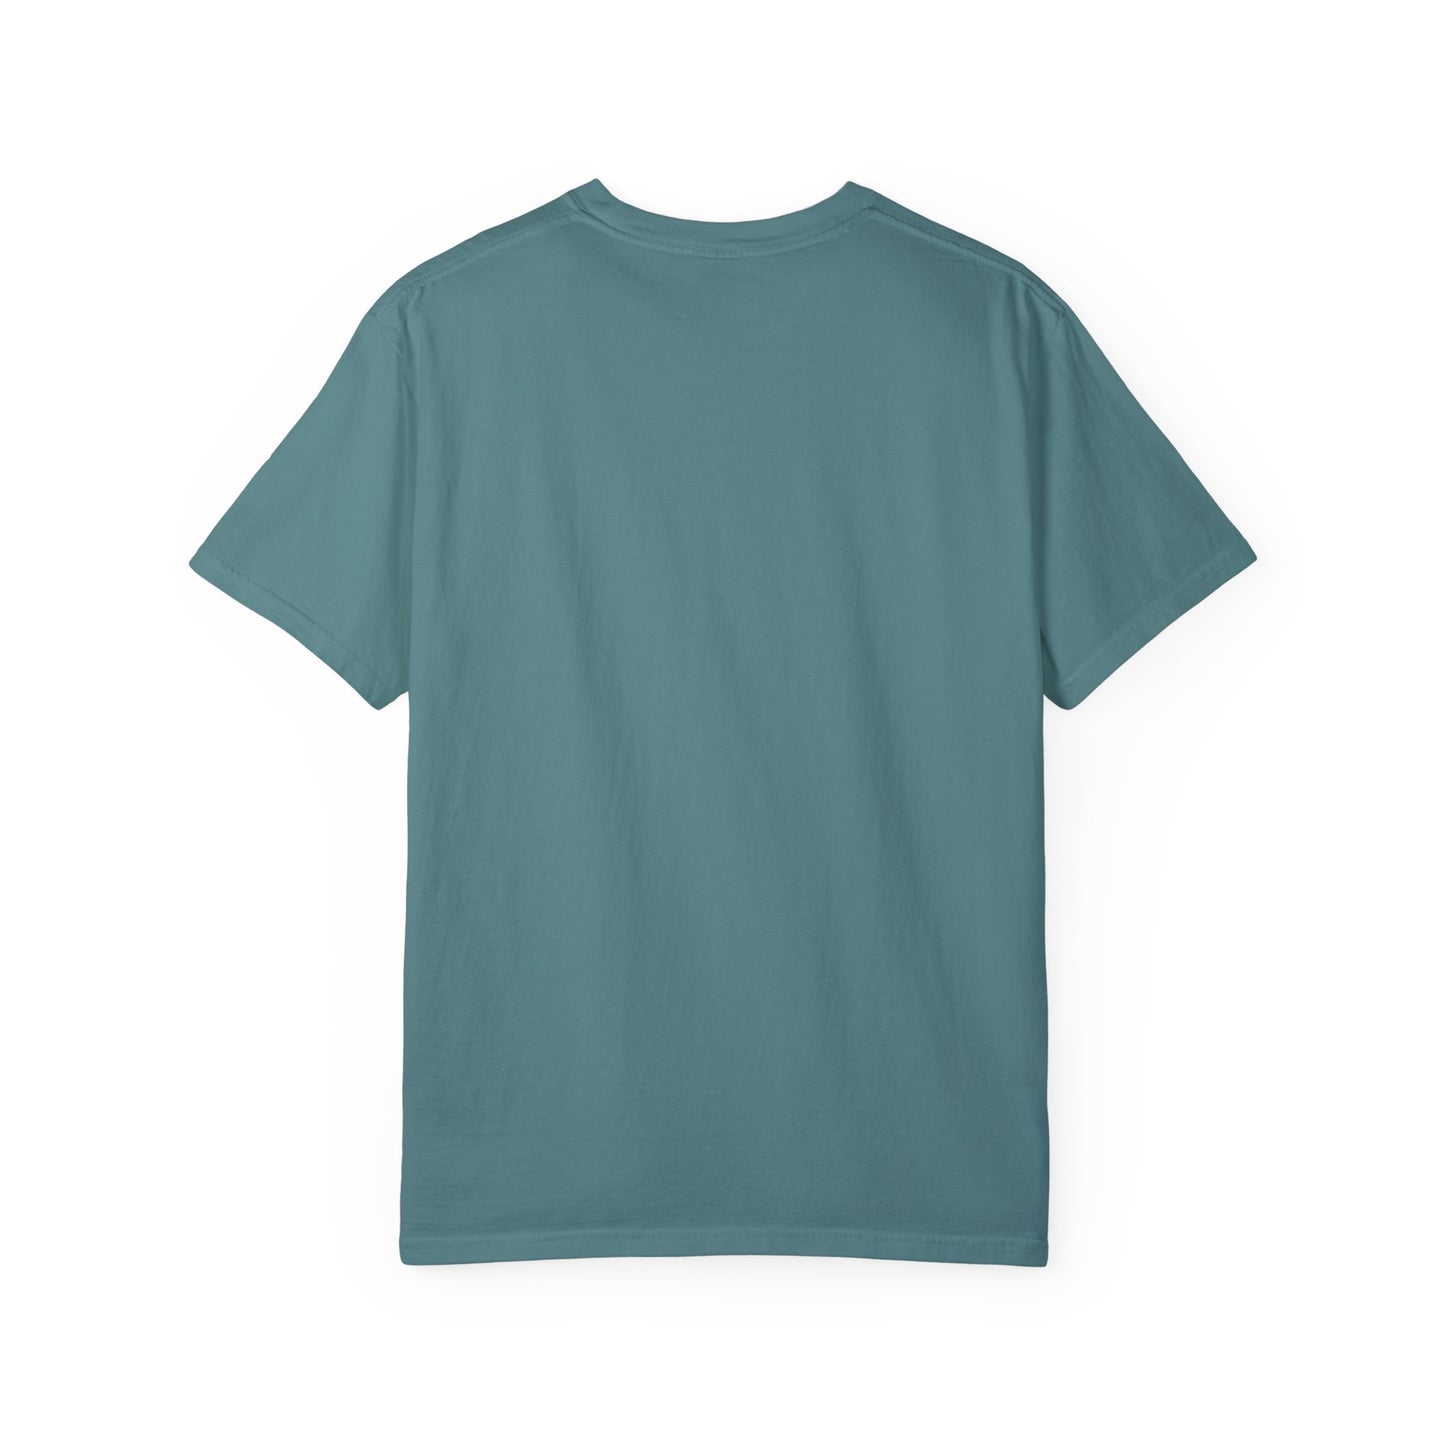 Rock and Roll Dinosaur - Unisex Garment-Dyed T-shirt